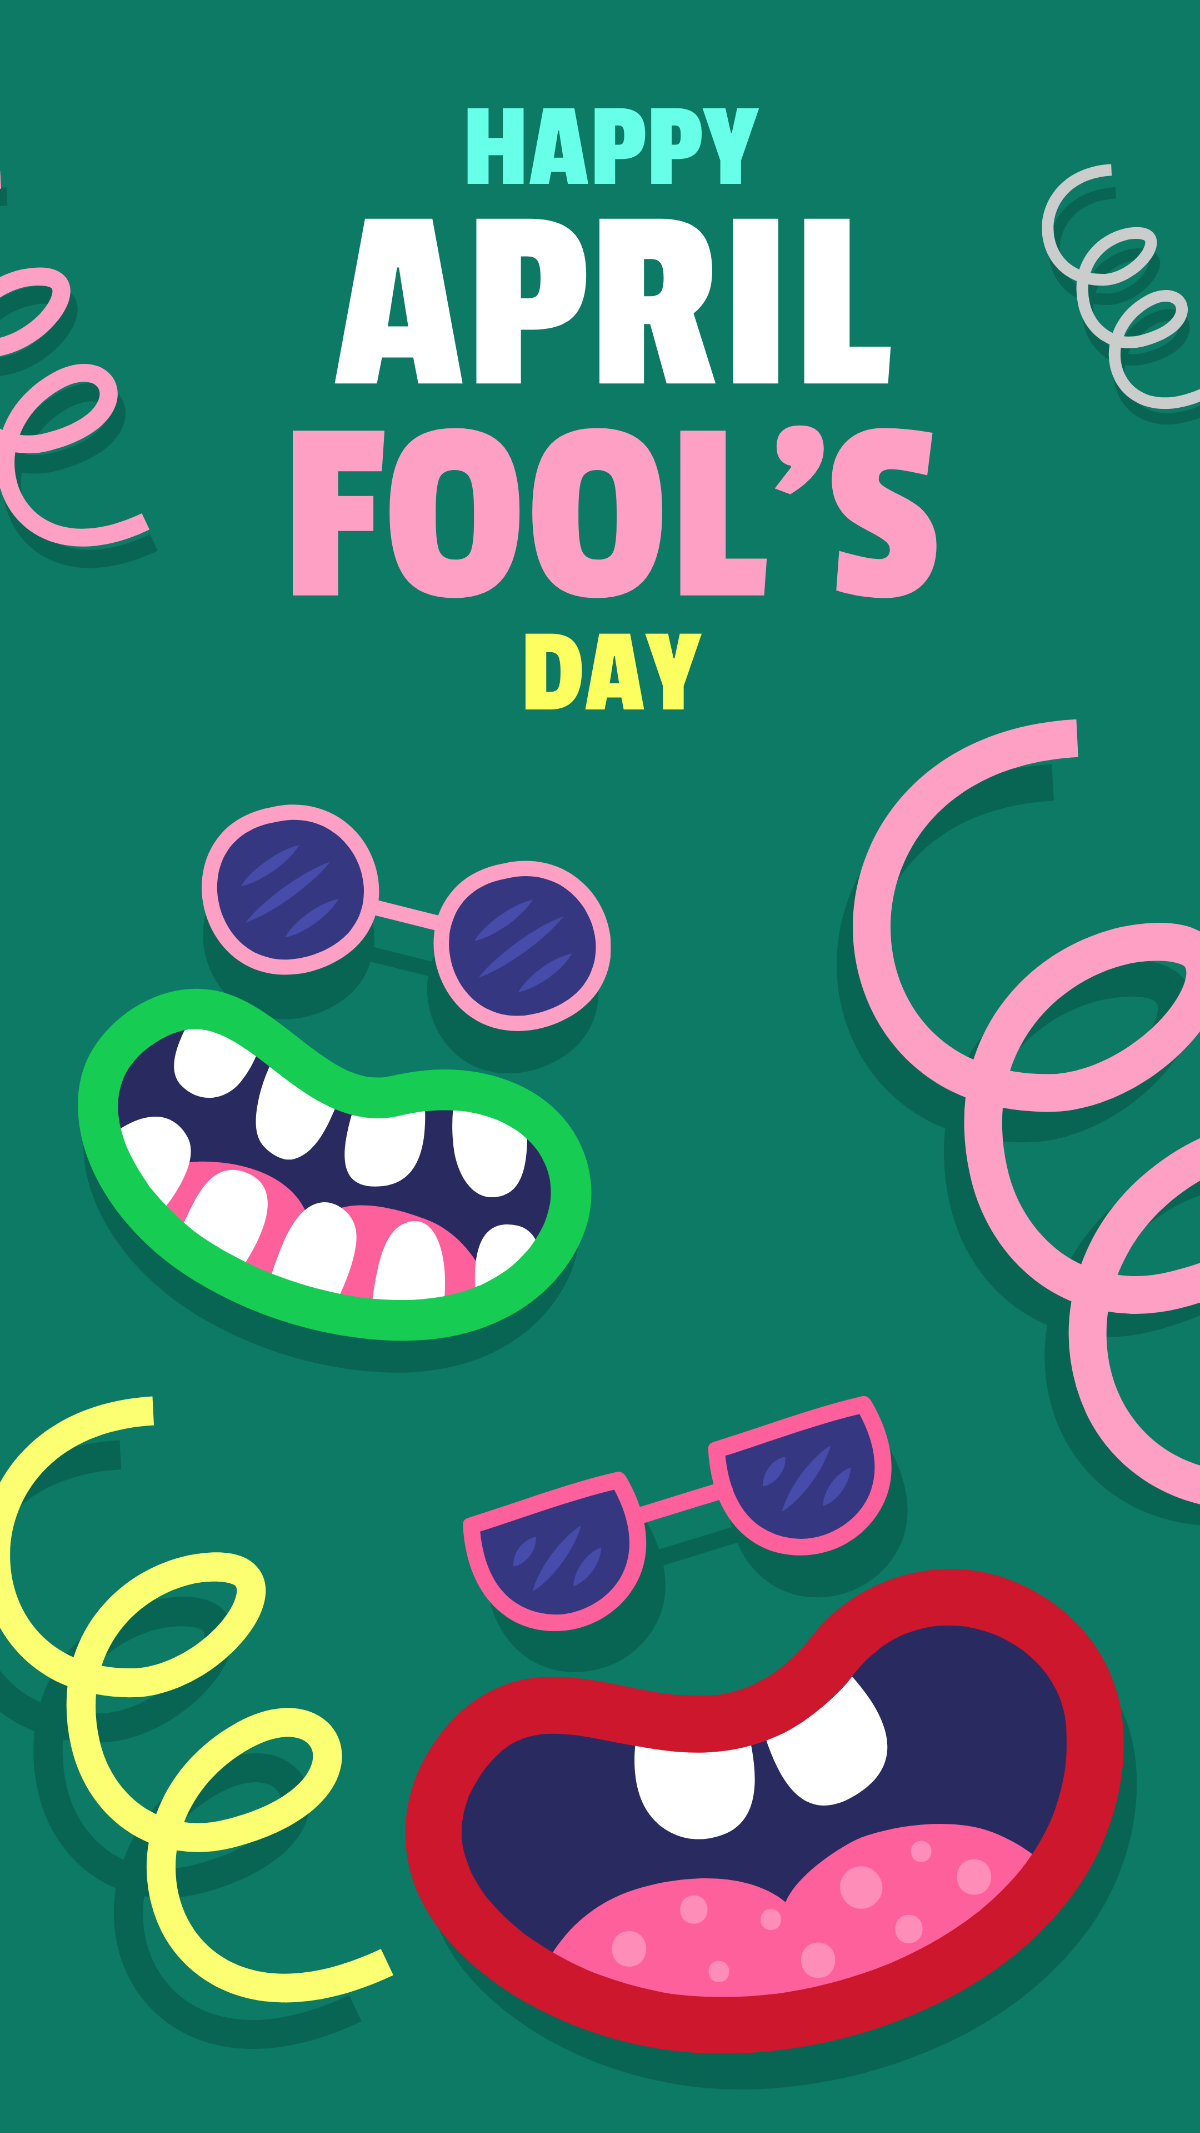 April Fools’ Day Wallpaper Template